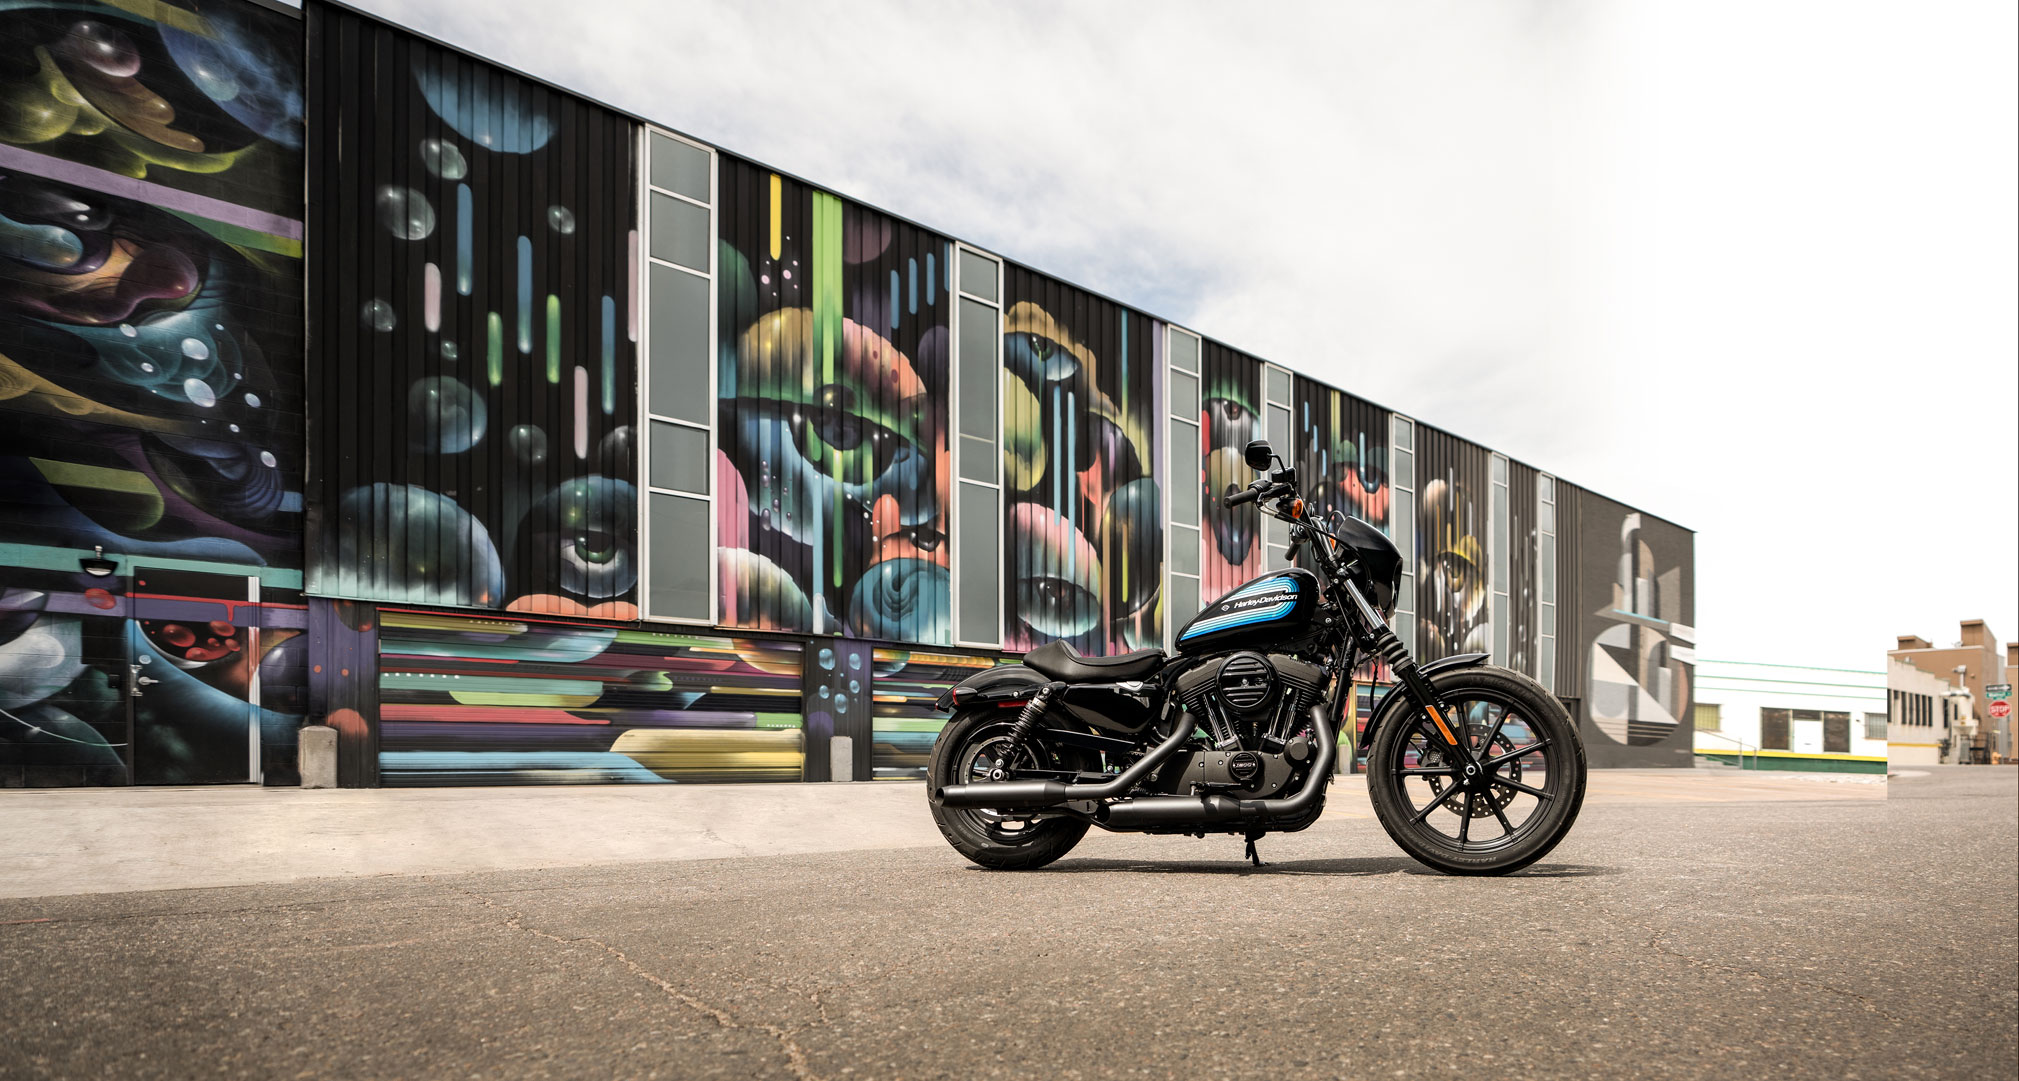 2019 Harley-Davidson Iron 1200 Guide • Total Motorcycle